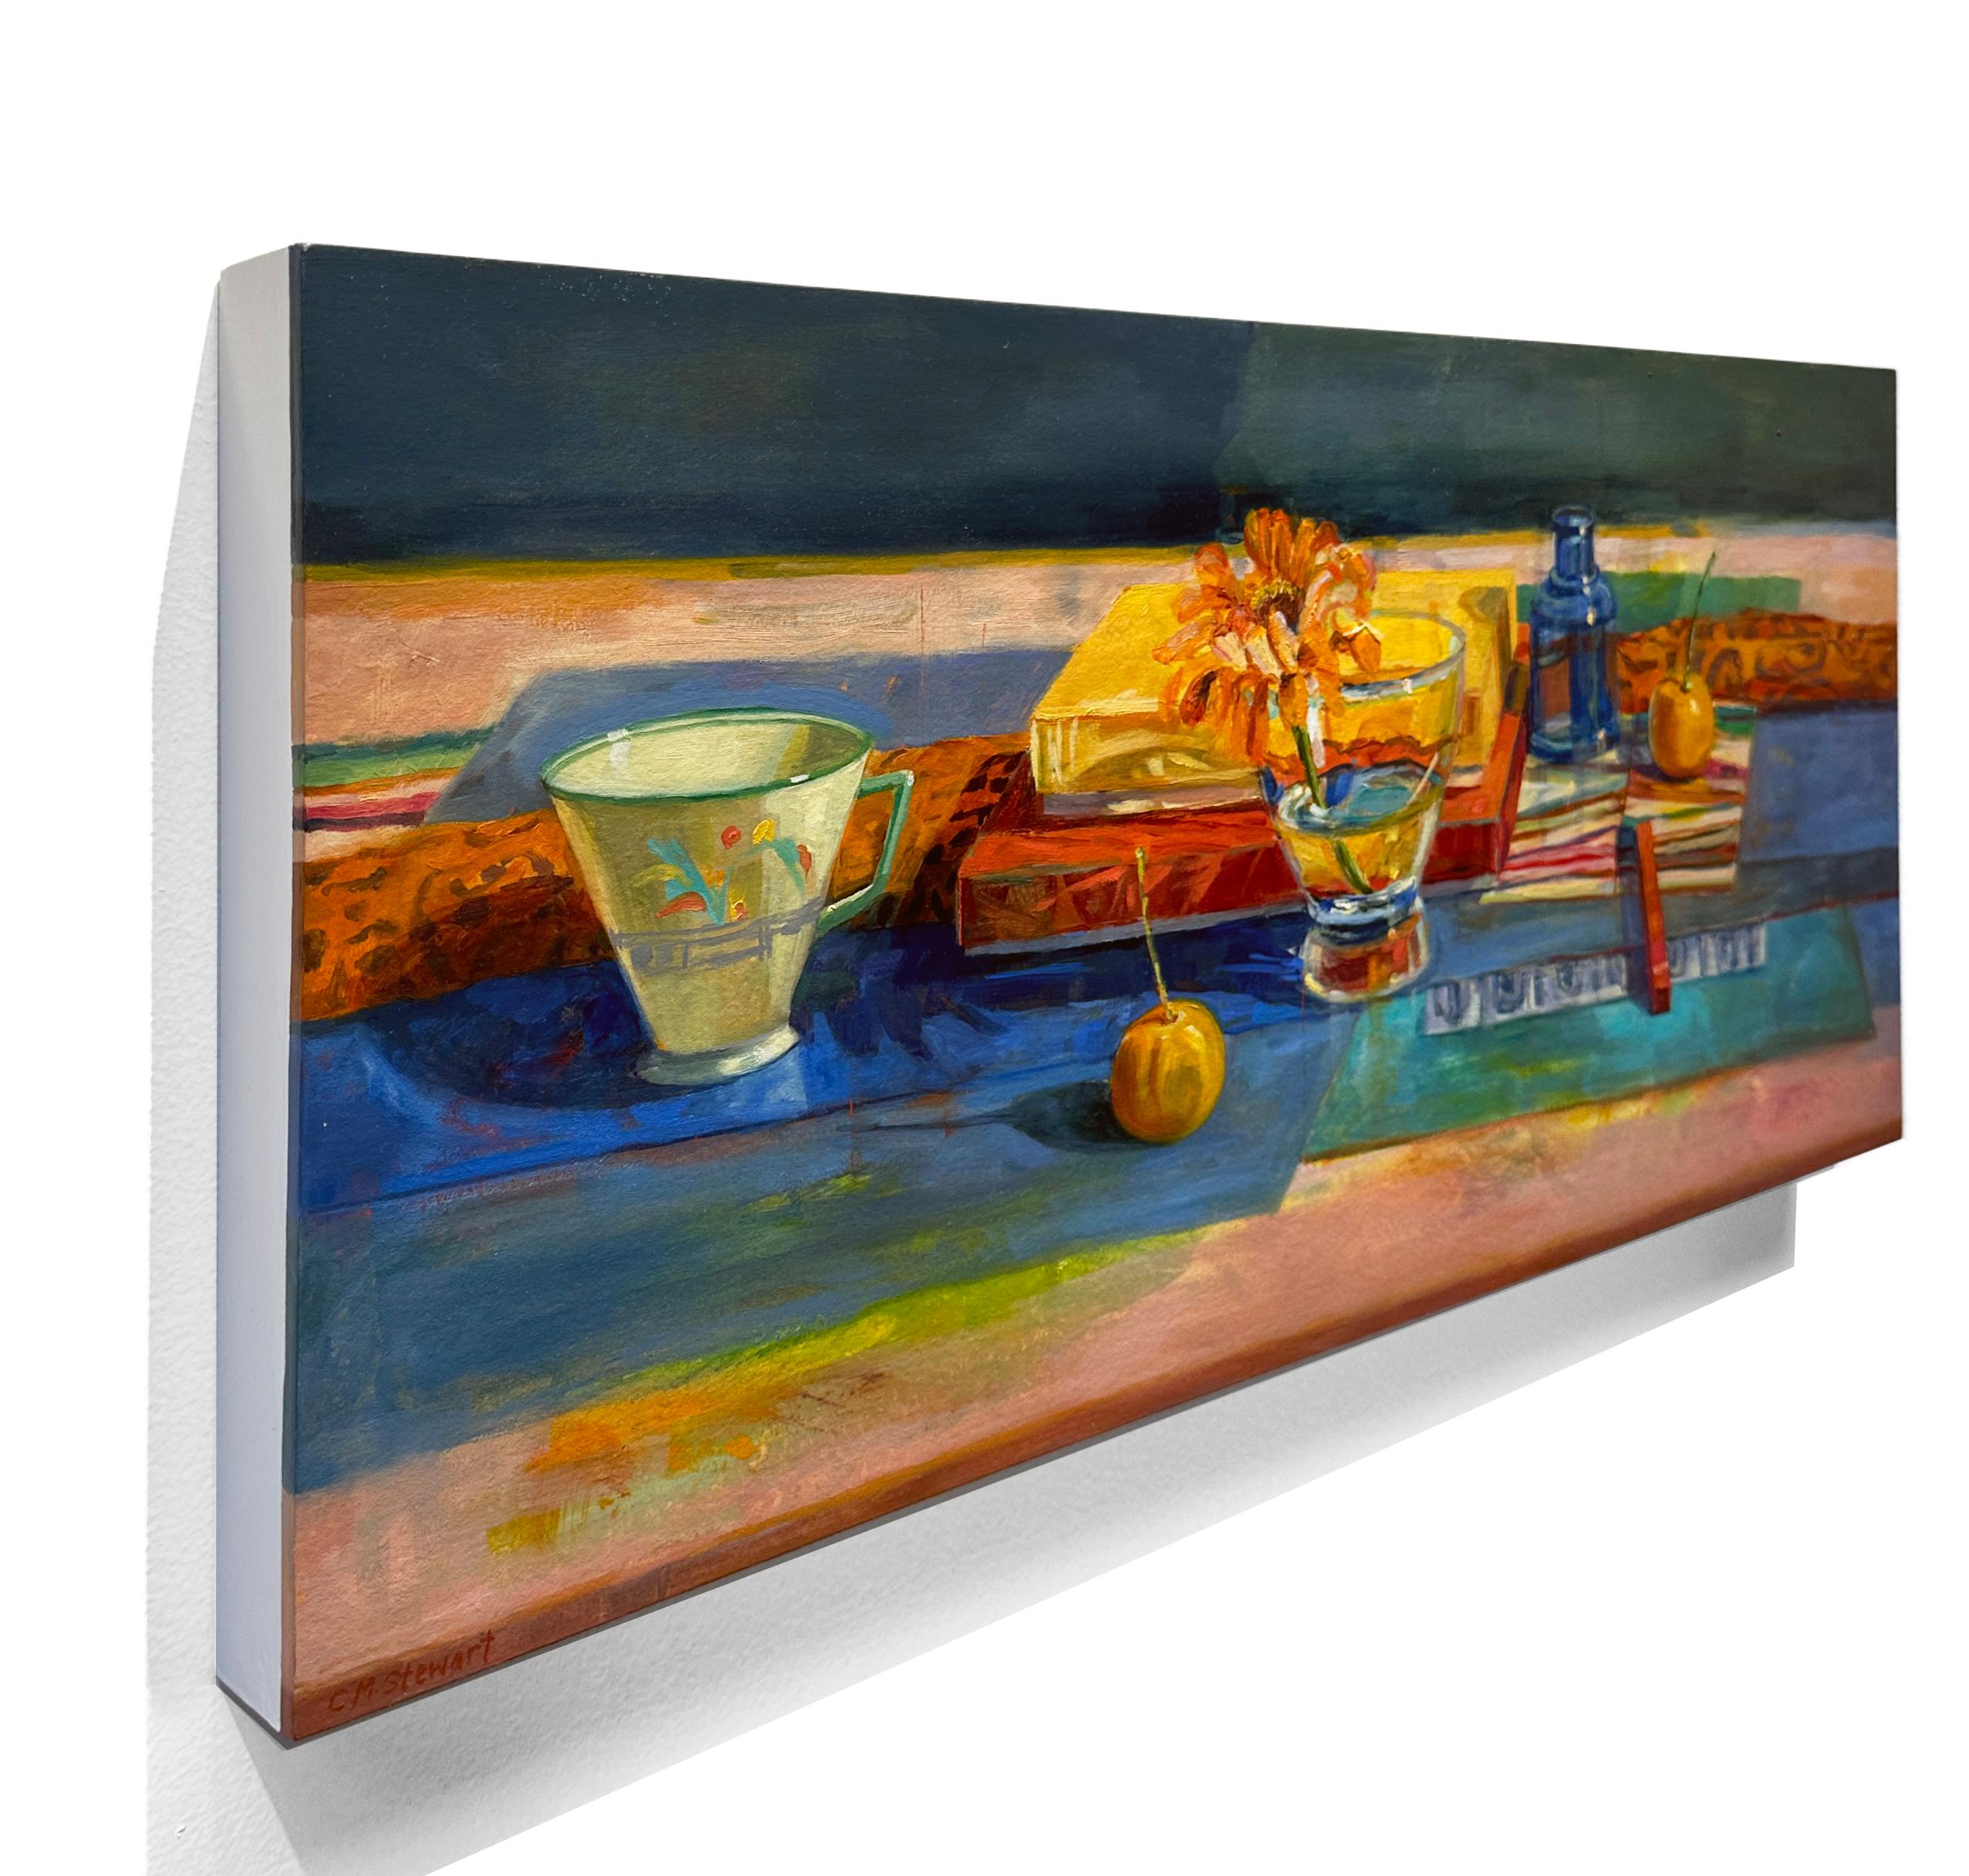 Zinnia, Kumquats - Still Life with Colorful Fabrics & Reflective Glassware - Impressionist Painting by Carol Stewart